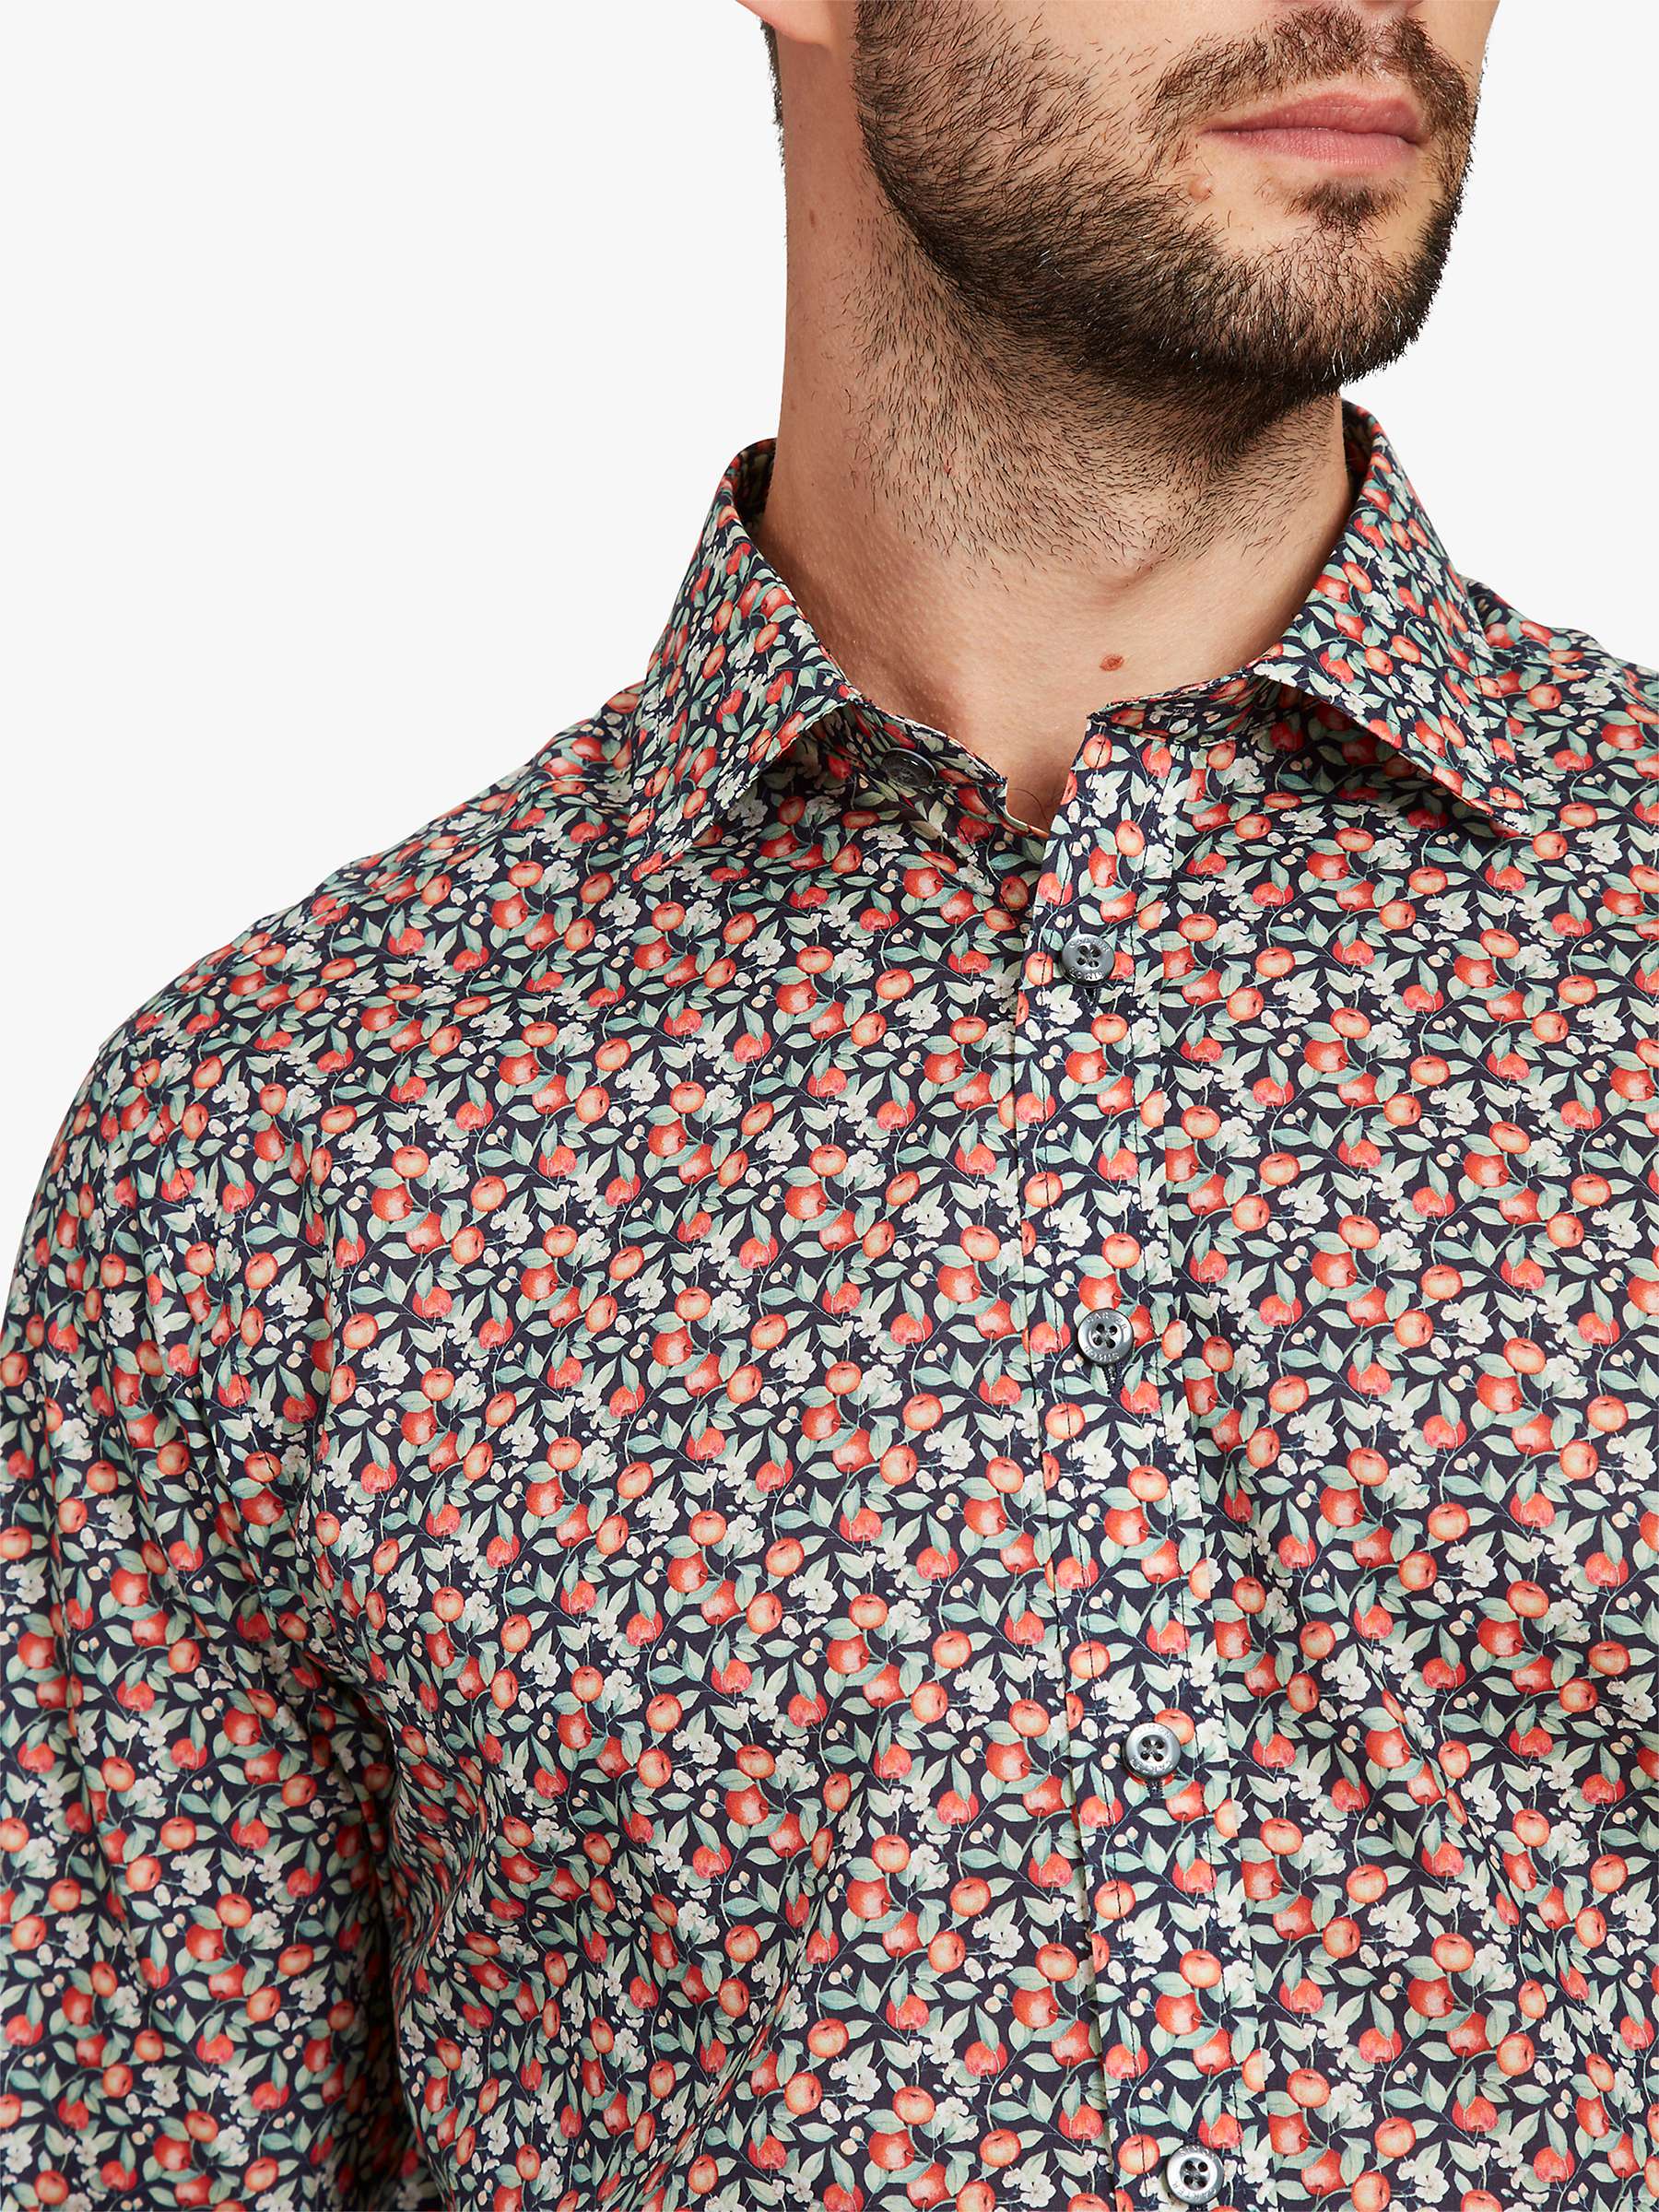 Buy Simon Carter Made With Liberty Fabric Elvington Orchard Tana Lawn Cotton Shirt, Blue Multi Online at johnlewis.com